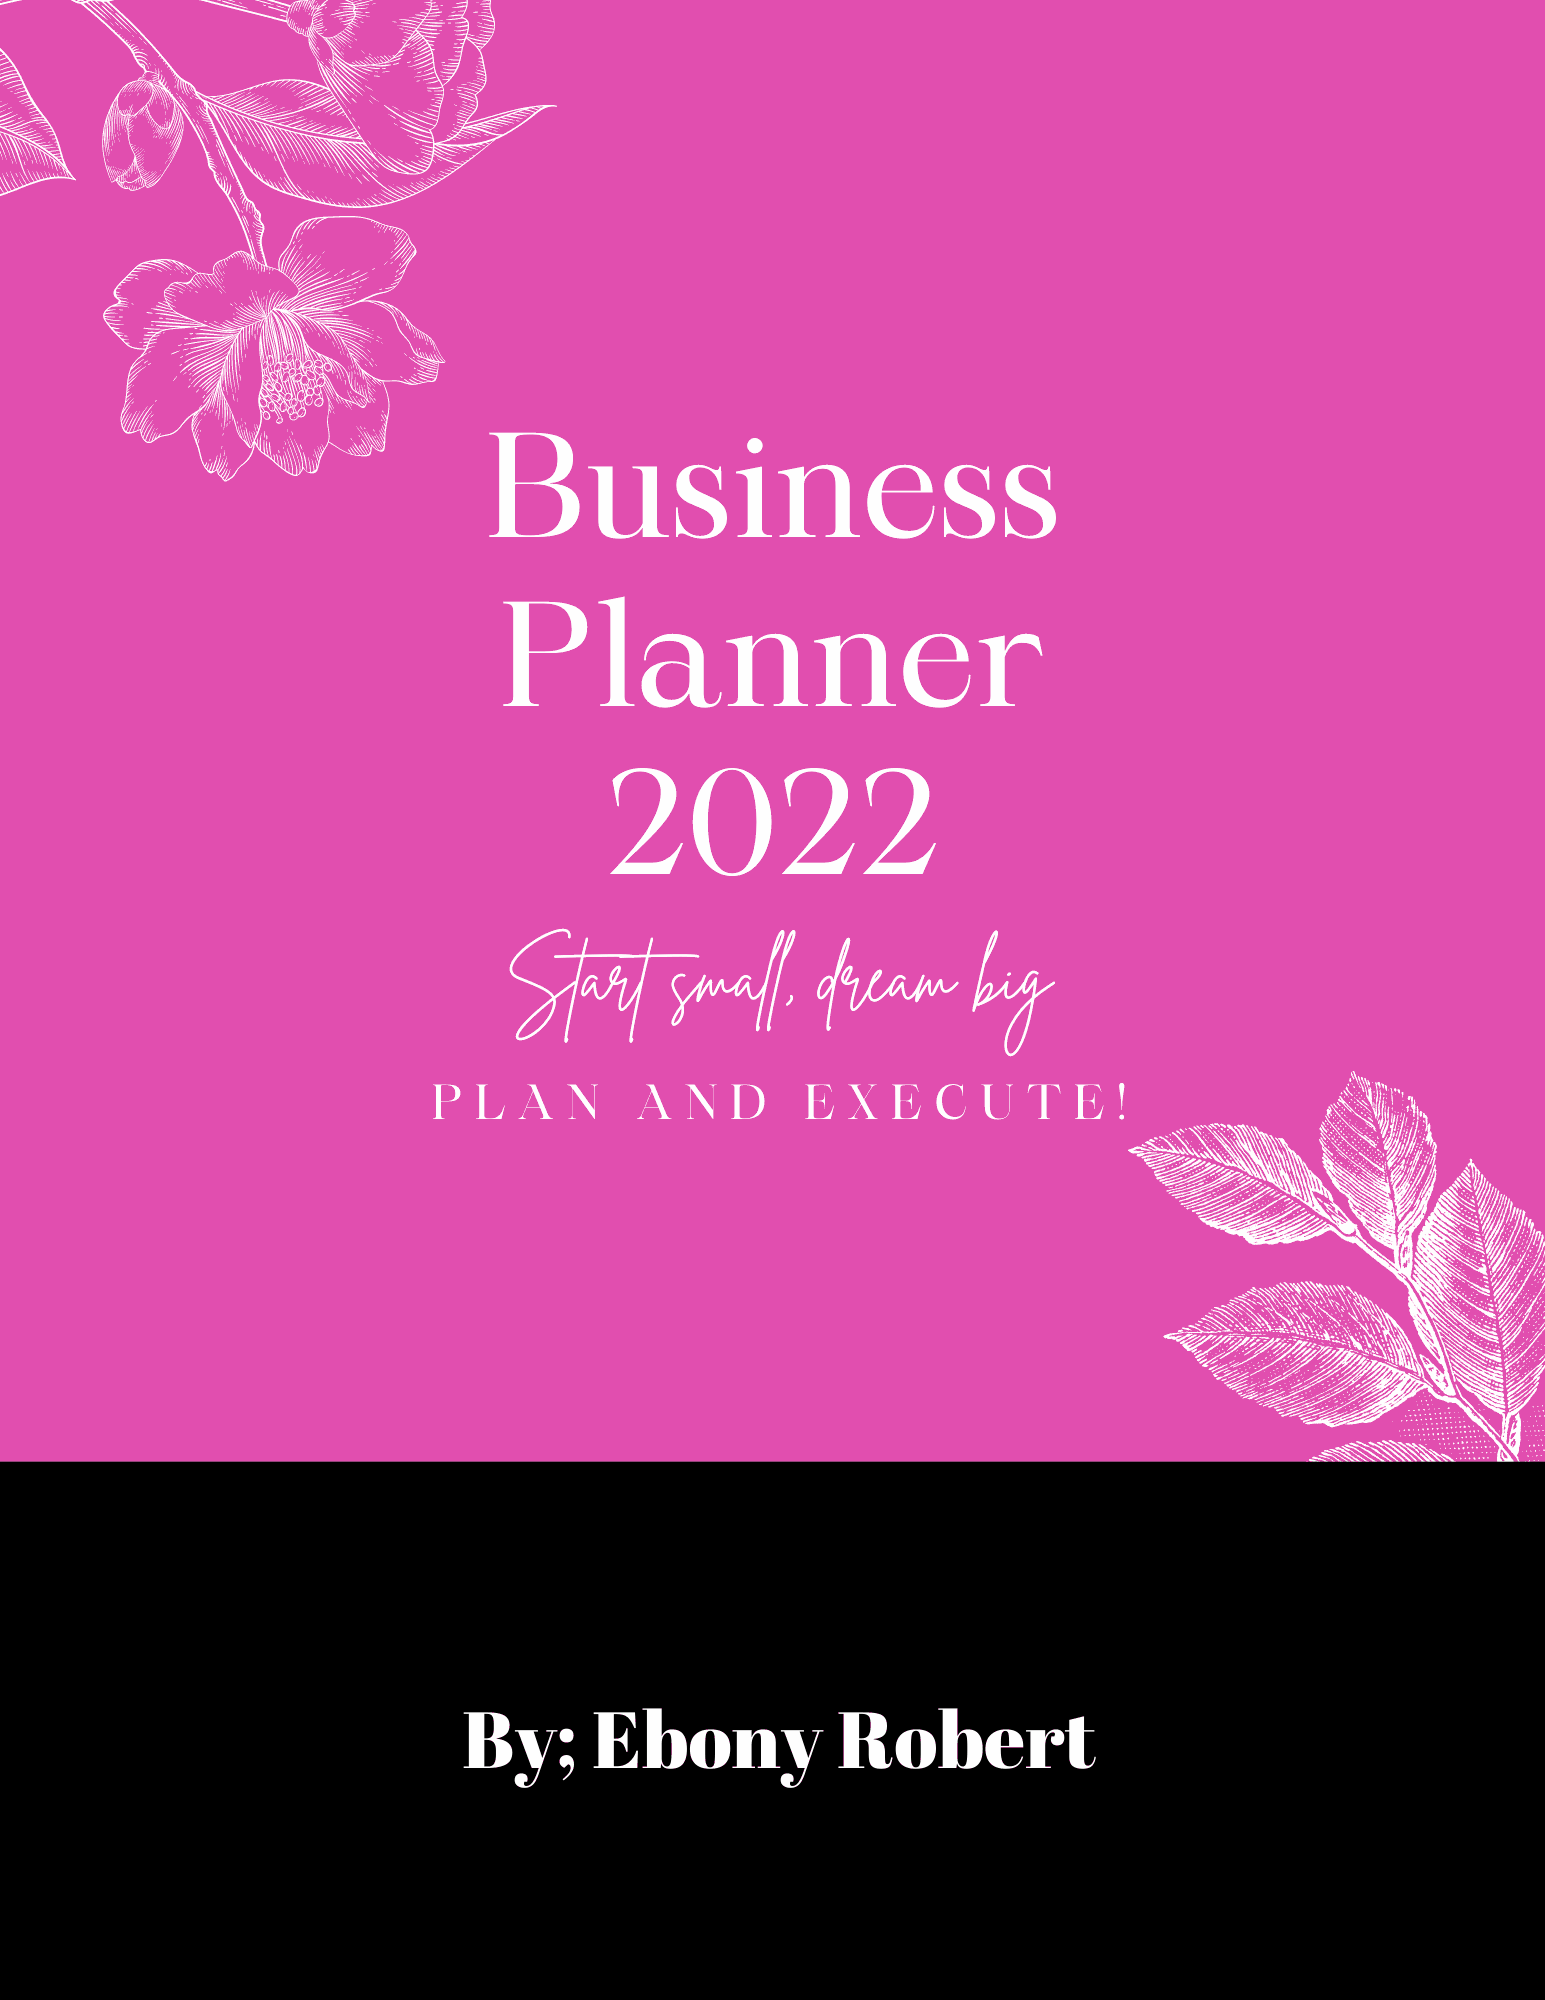 Business Planner Template Bundle